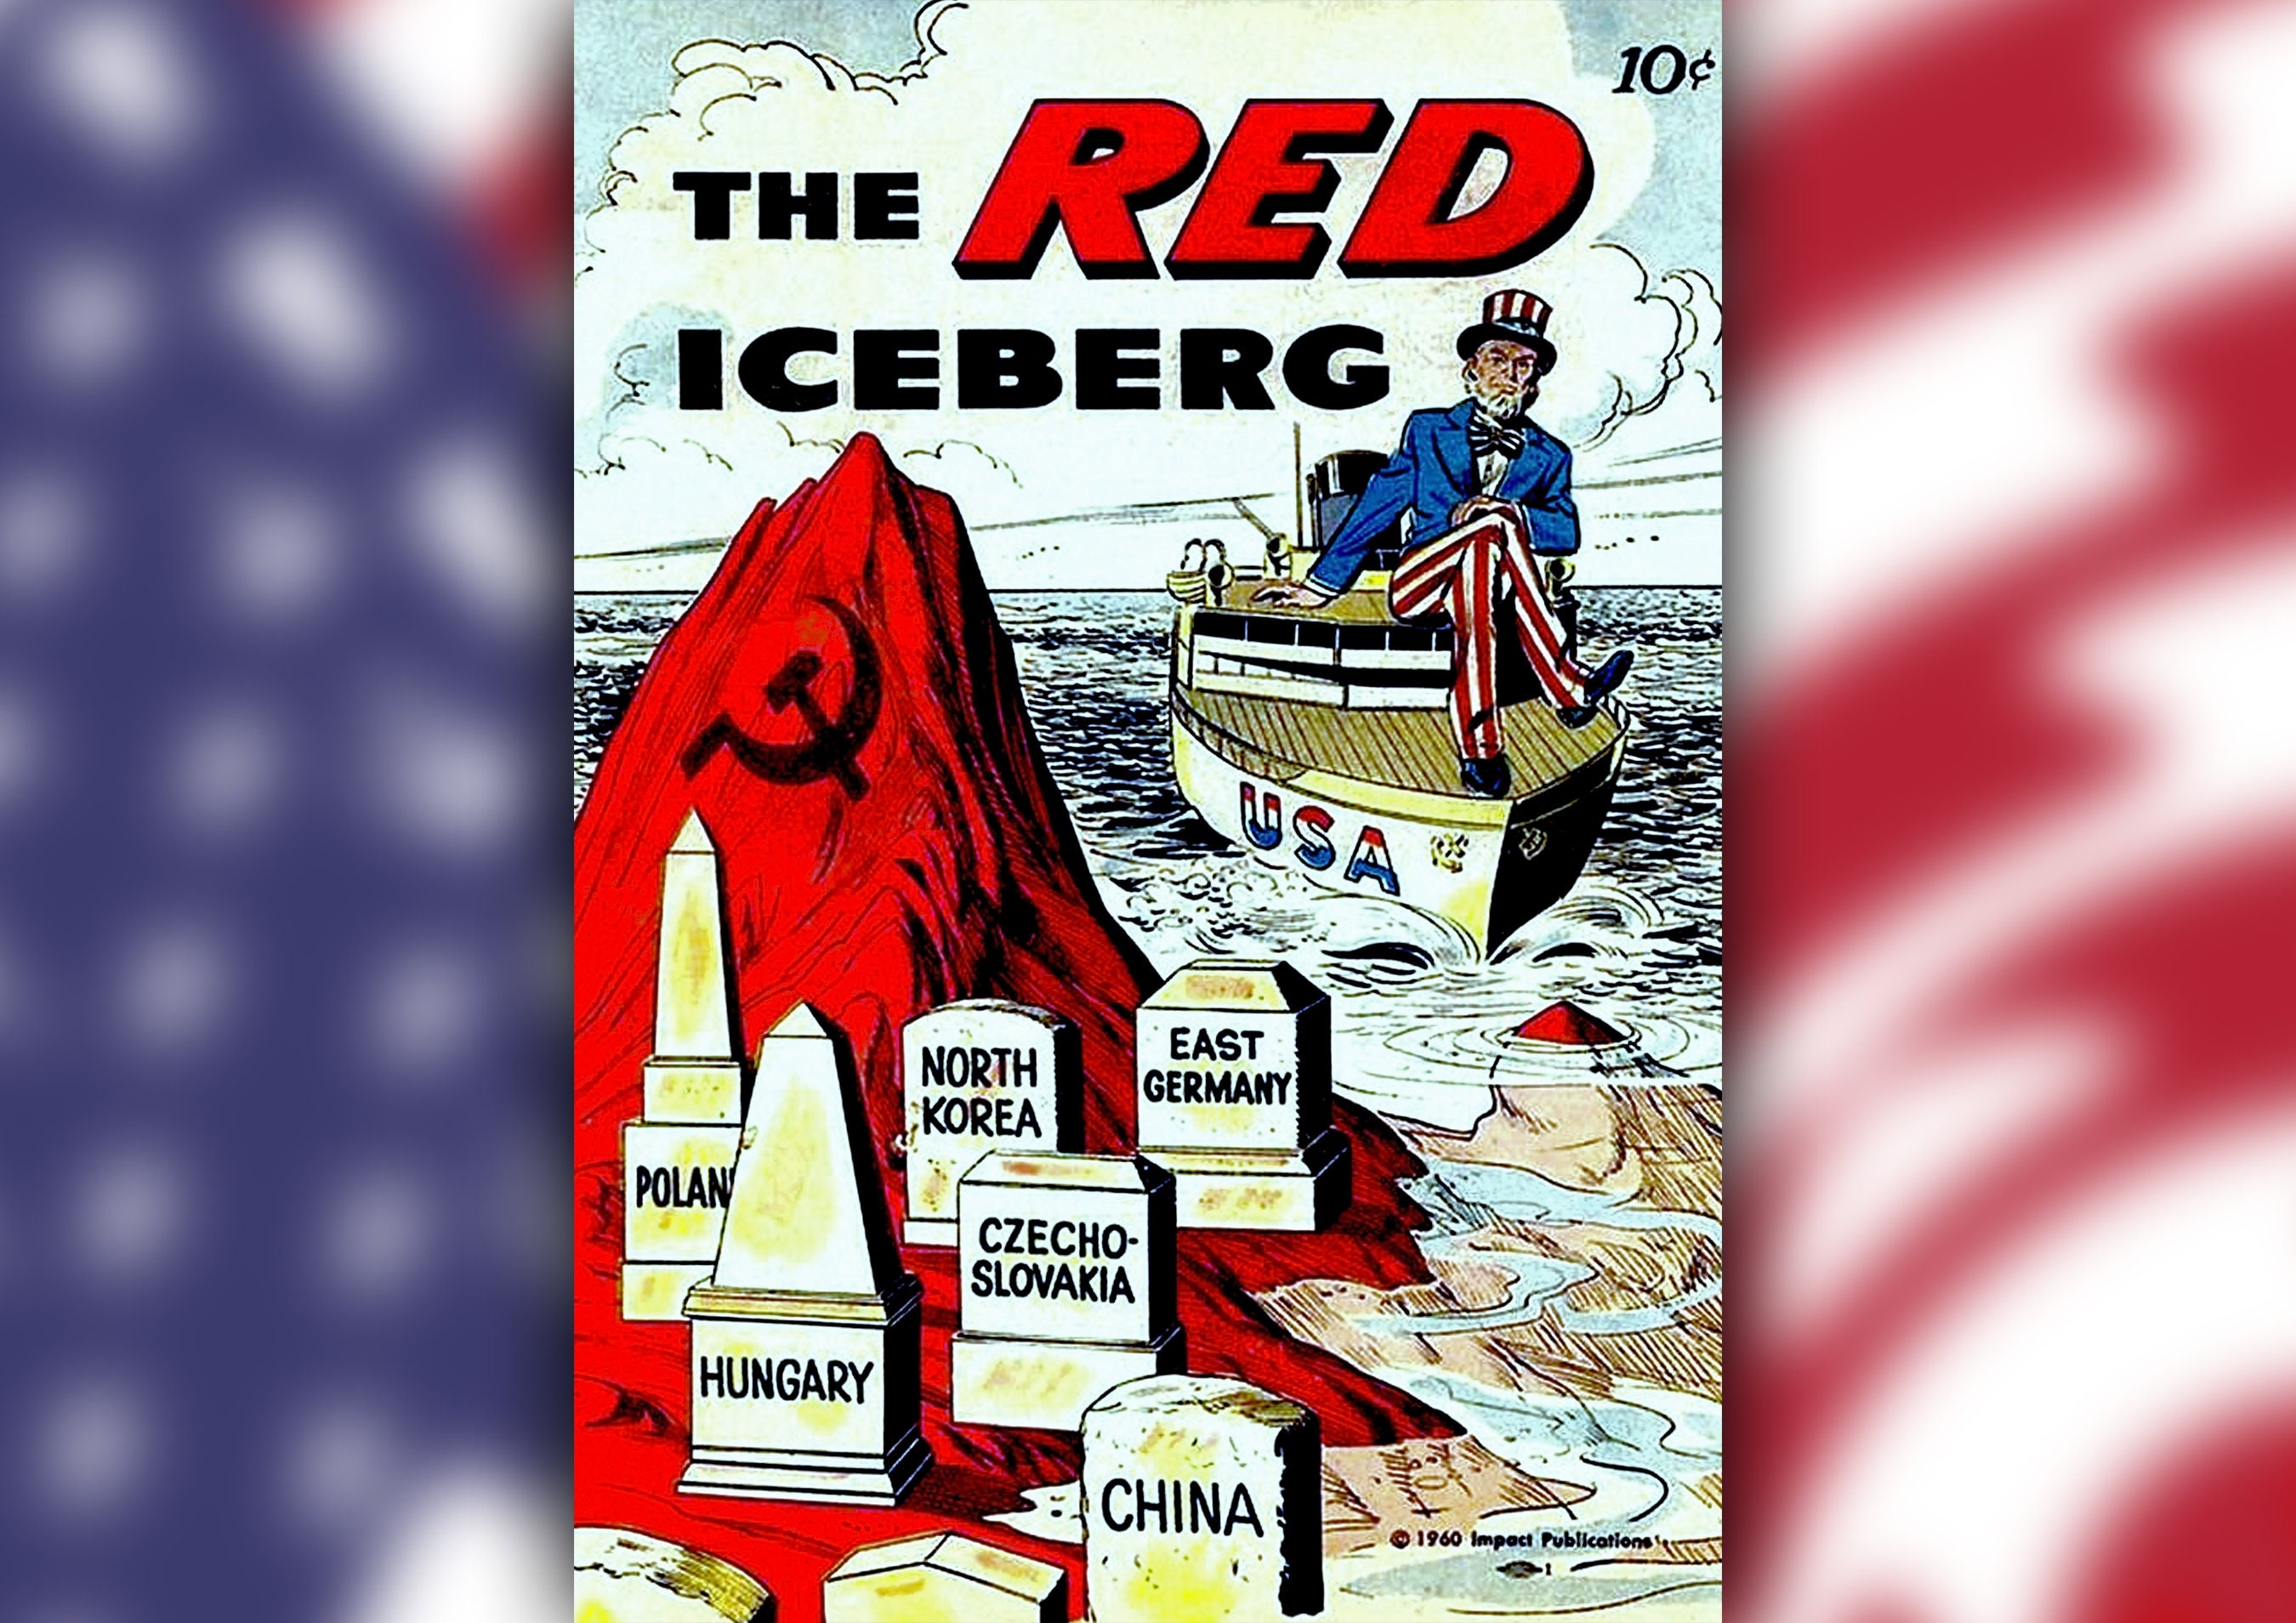 The red iceberg comic book